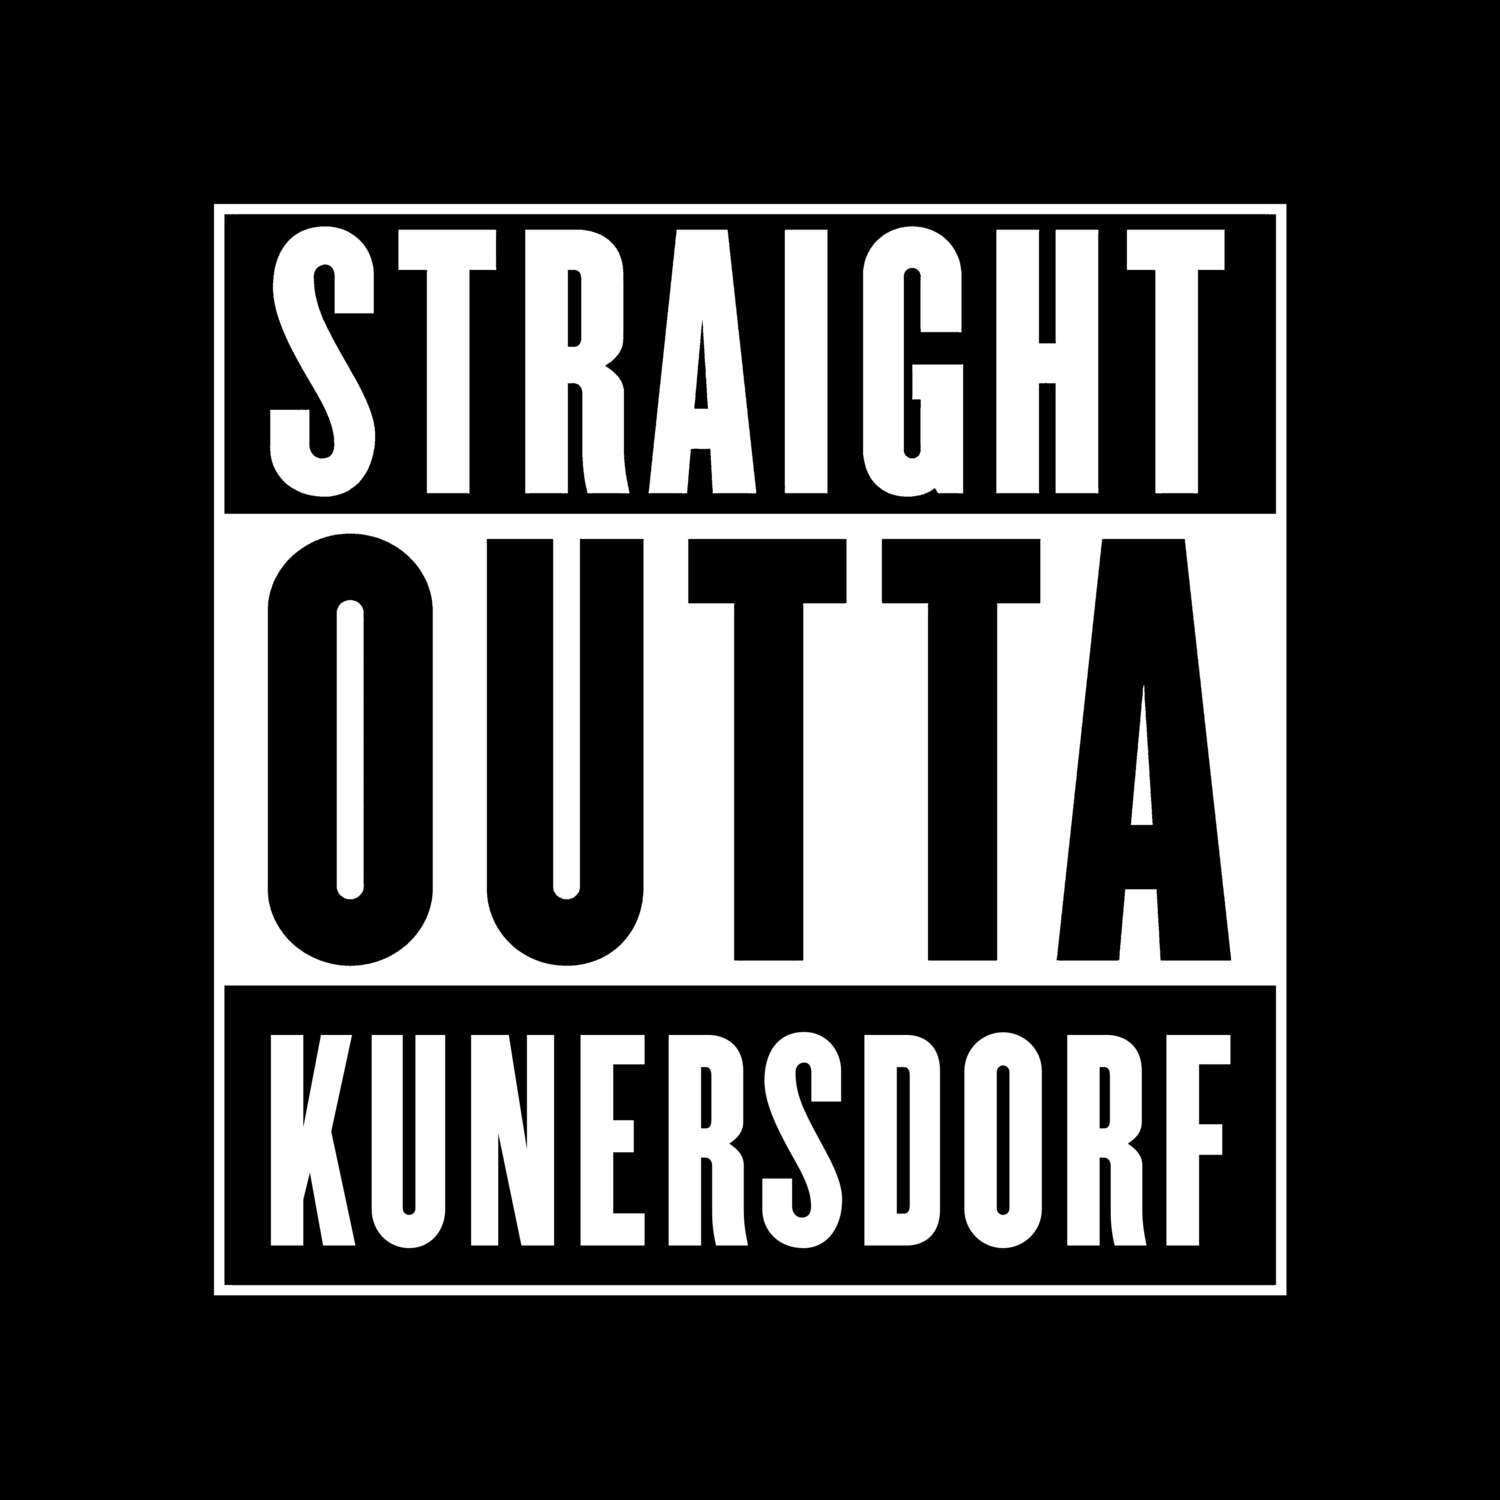 Kunersdorf T-Shirt »Straight Outta«